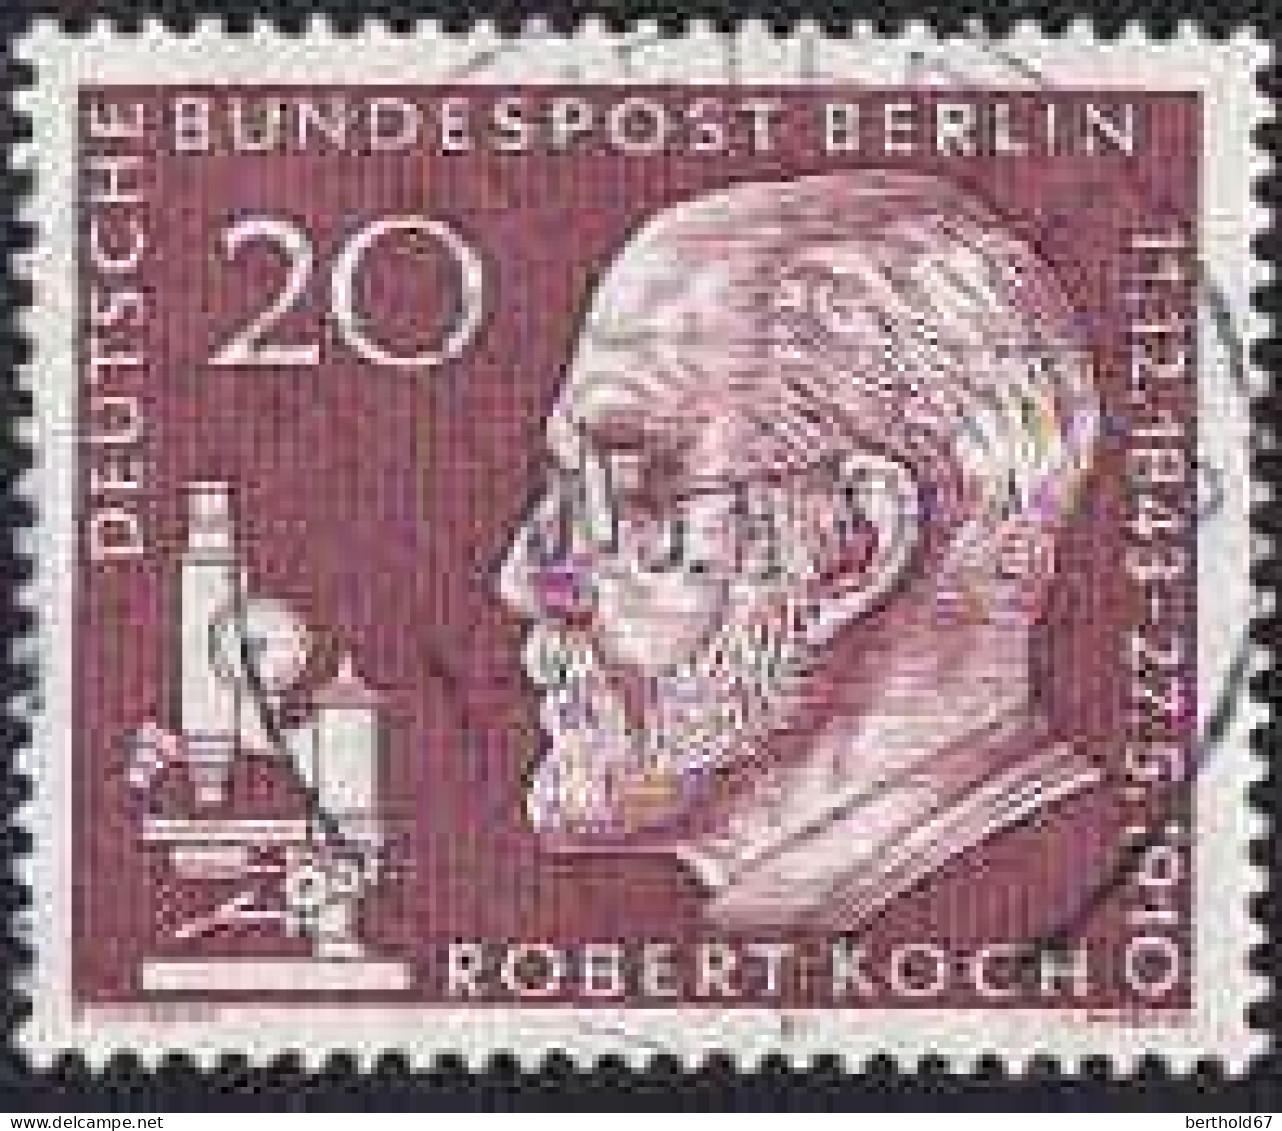 Berlin Poste Obl Yv:170 Mi:191 Robert Koch Bacteriologue Prix Nobel (TB Cachet Rond) - Oblitérés